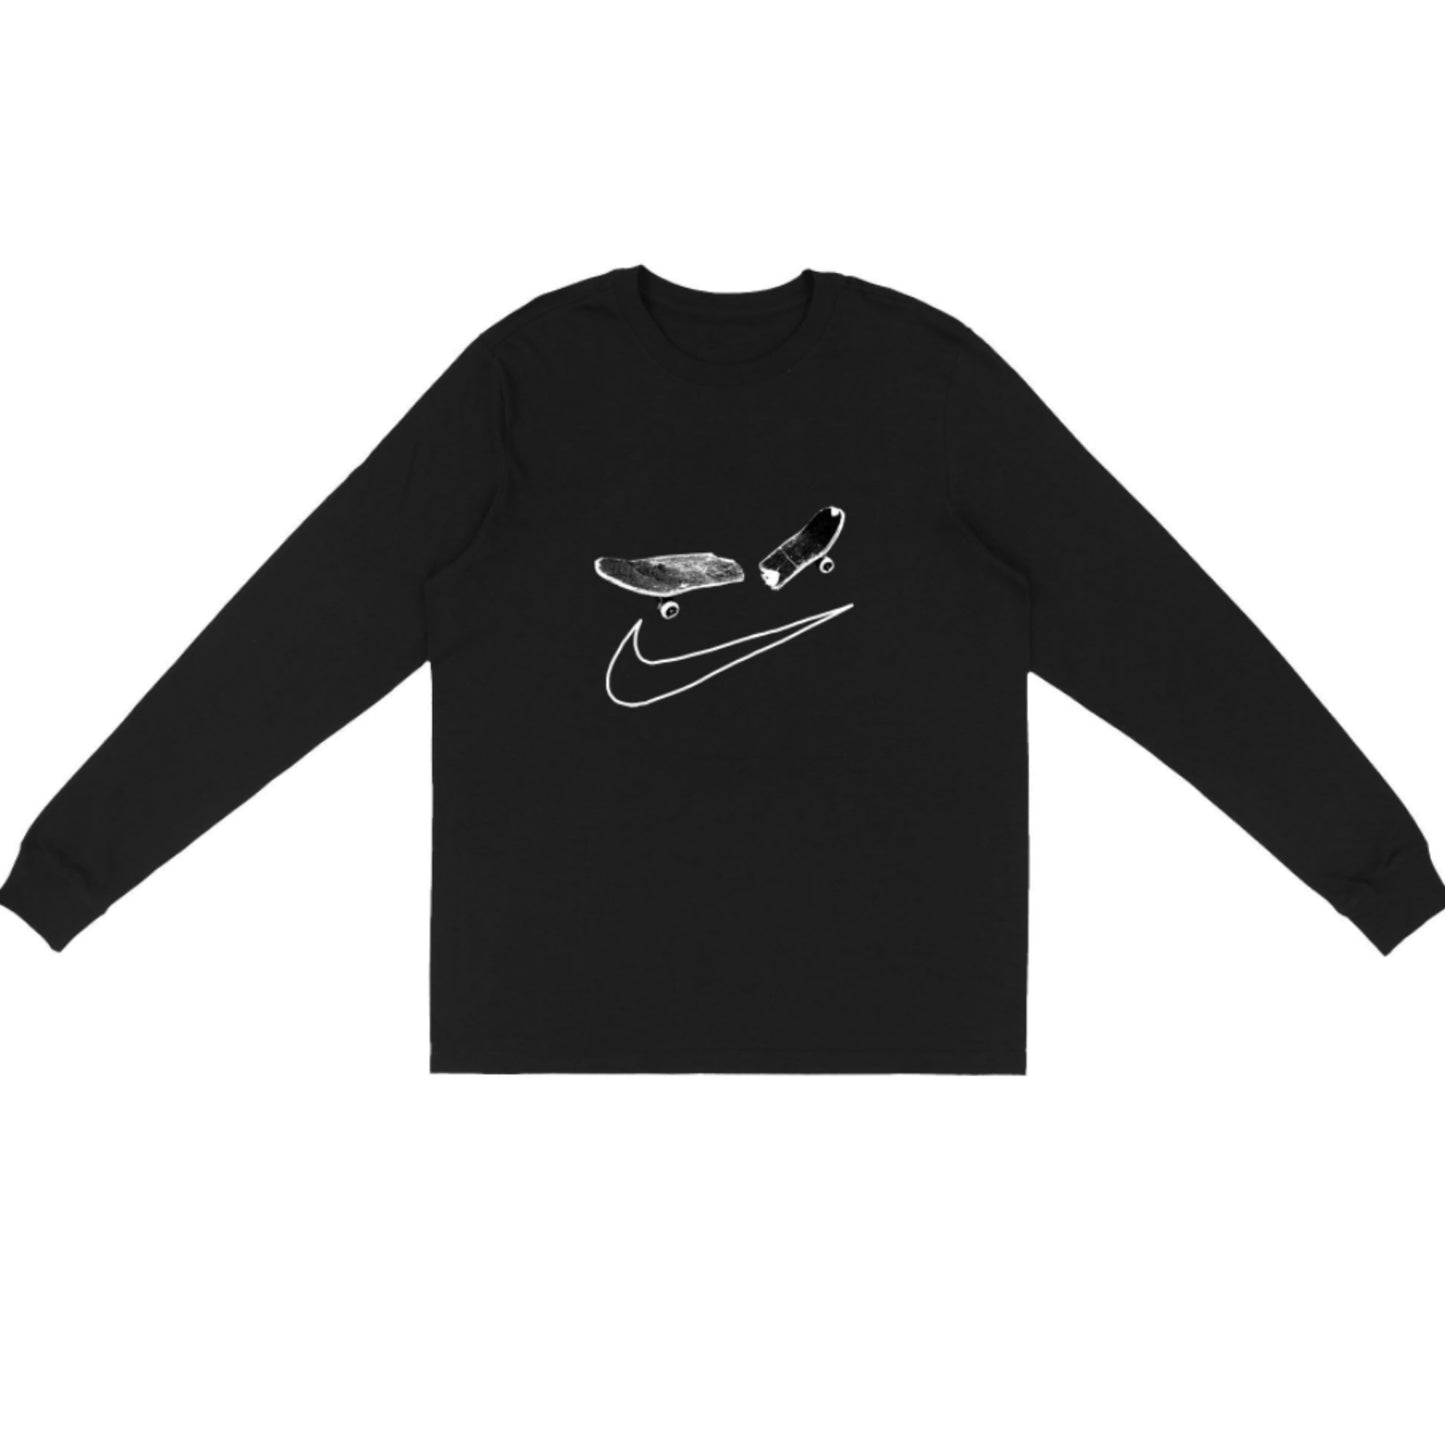 Travis Scott Cactus Jack Longsleeve T-Shirt Black  For Nike SB